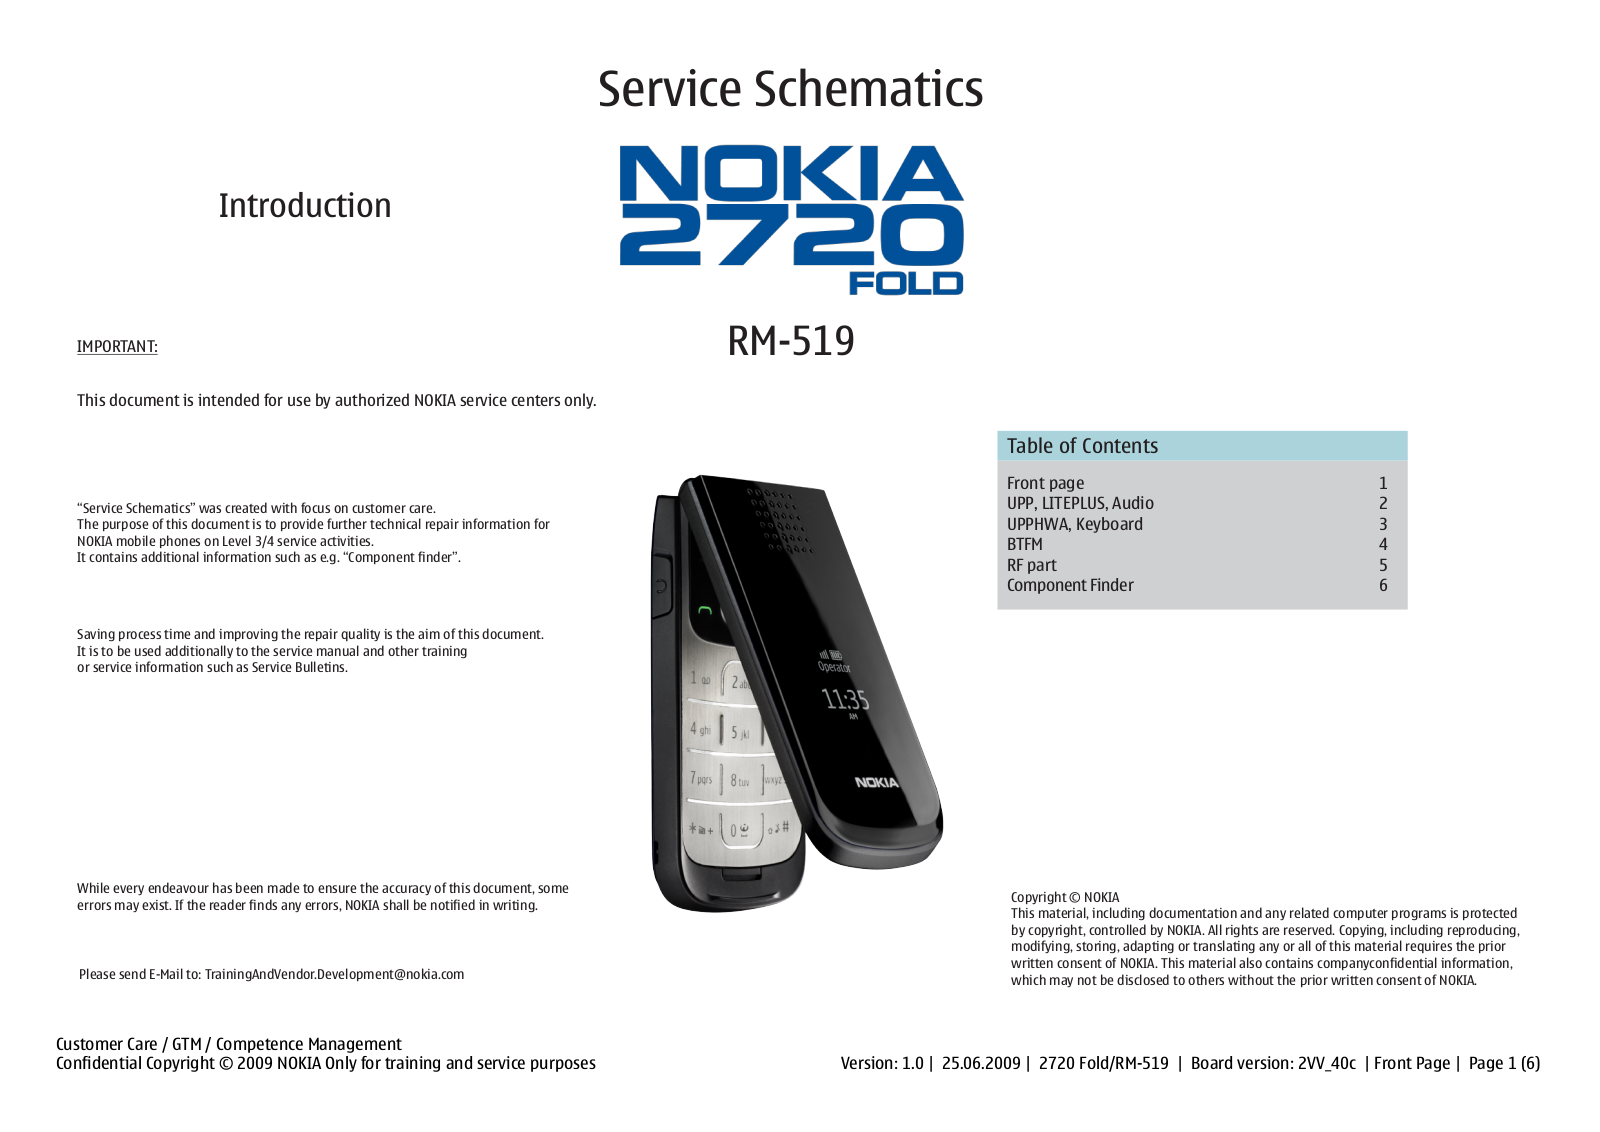 Nokia 2720 fold, RM-519 Schema